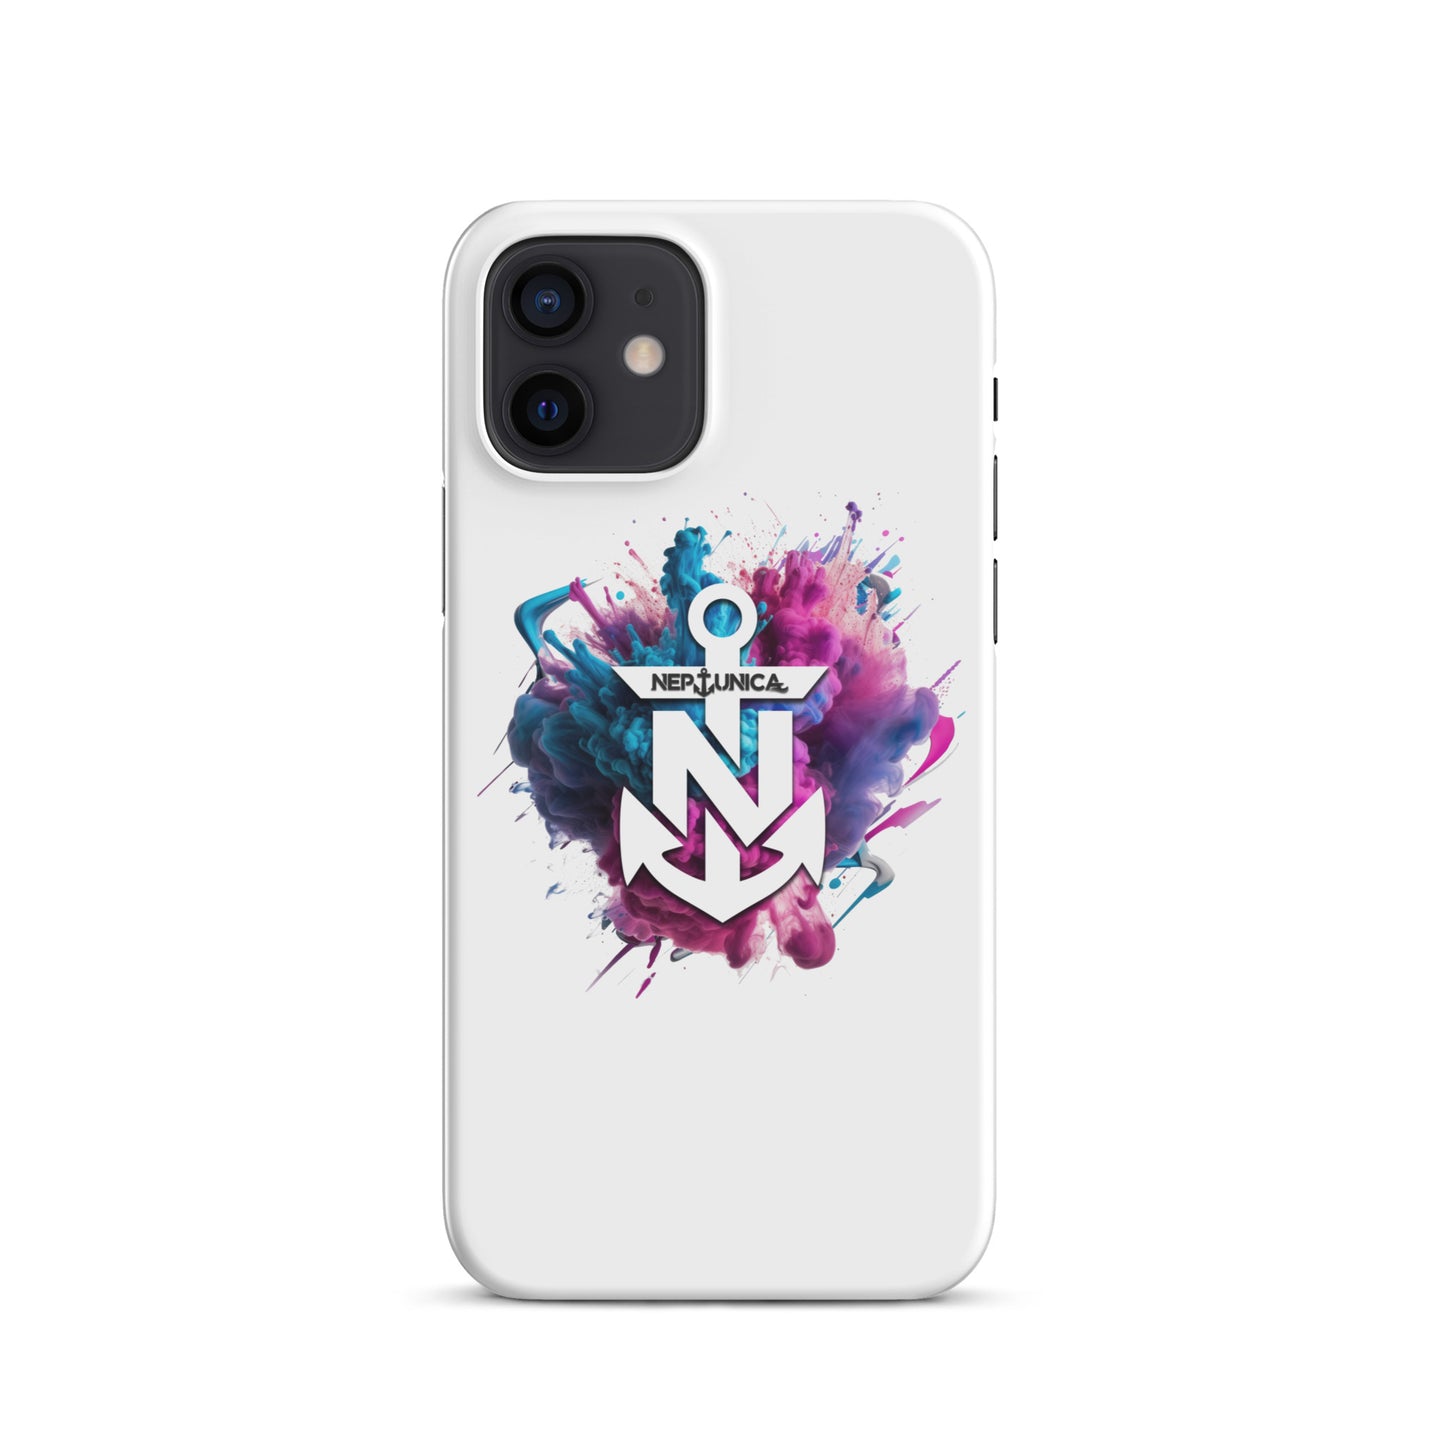 Neptunica iPhone® Case | Colorsplash Edition